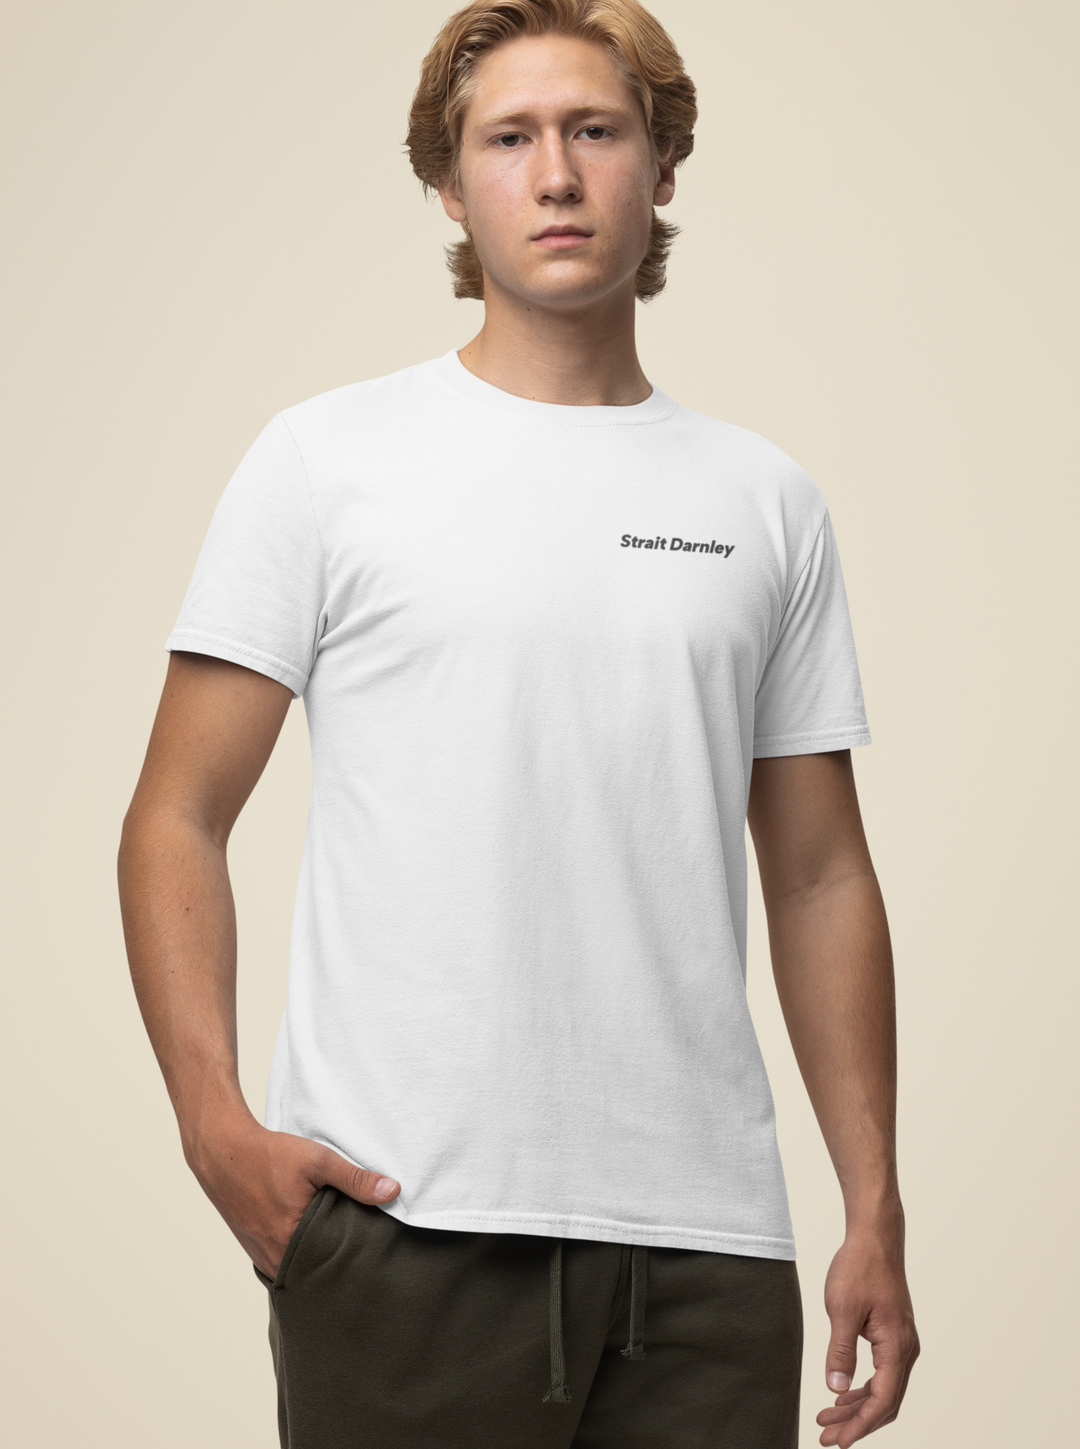 Strait Darnley  - Unisex Organic T-shirt